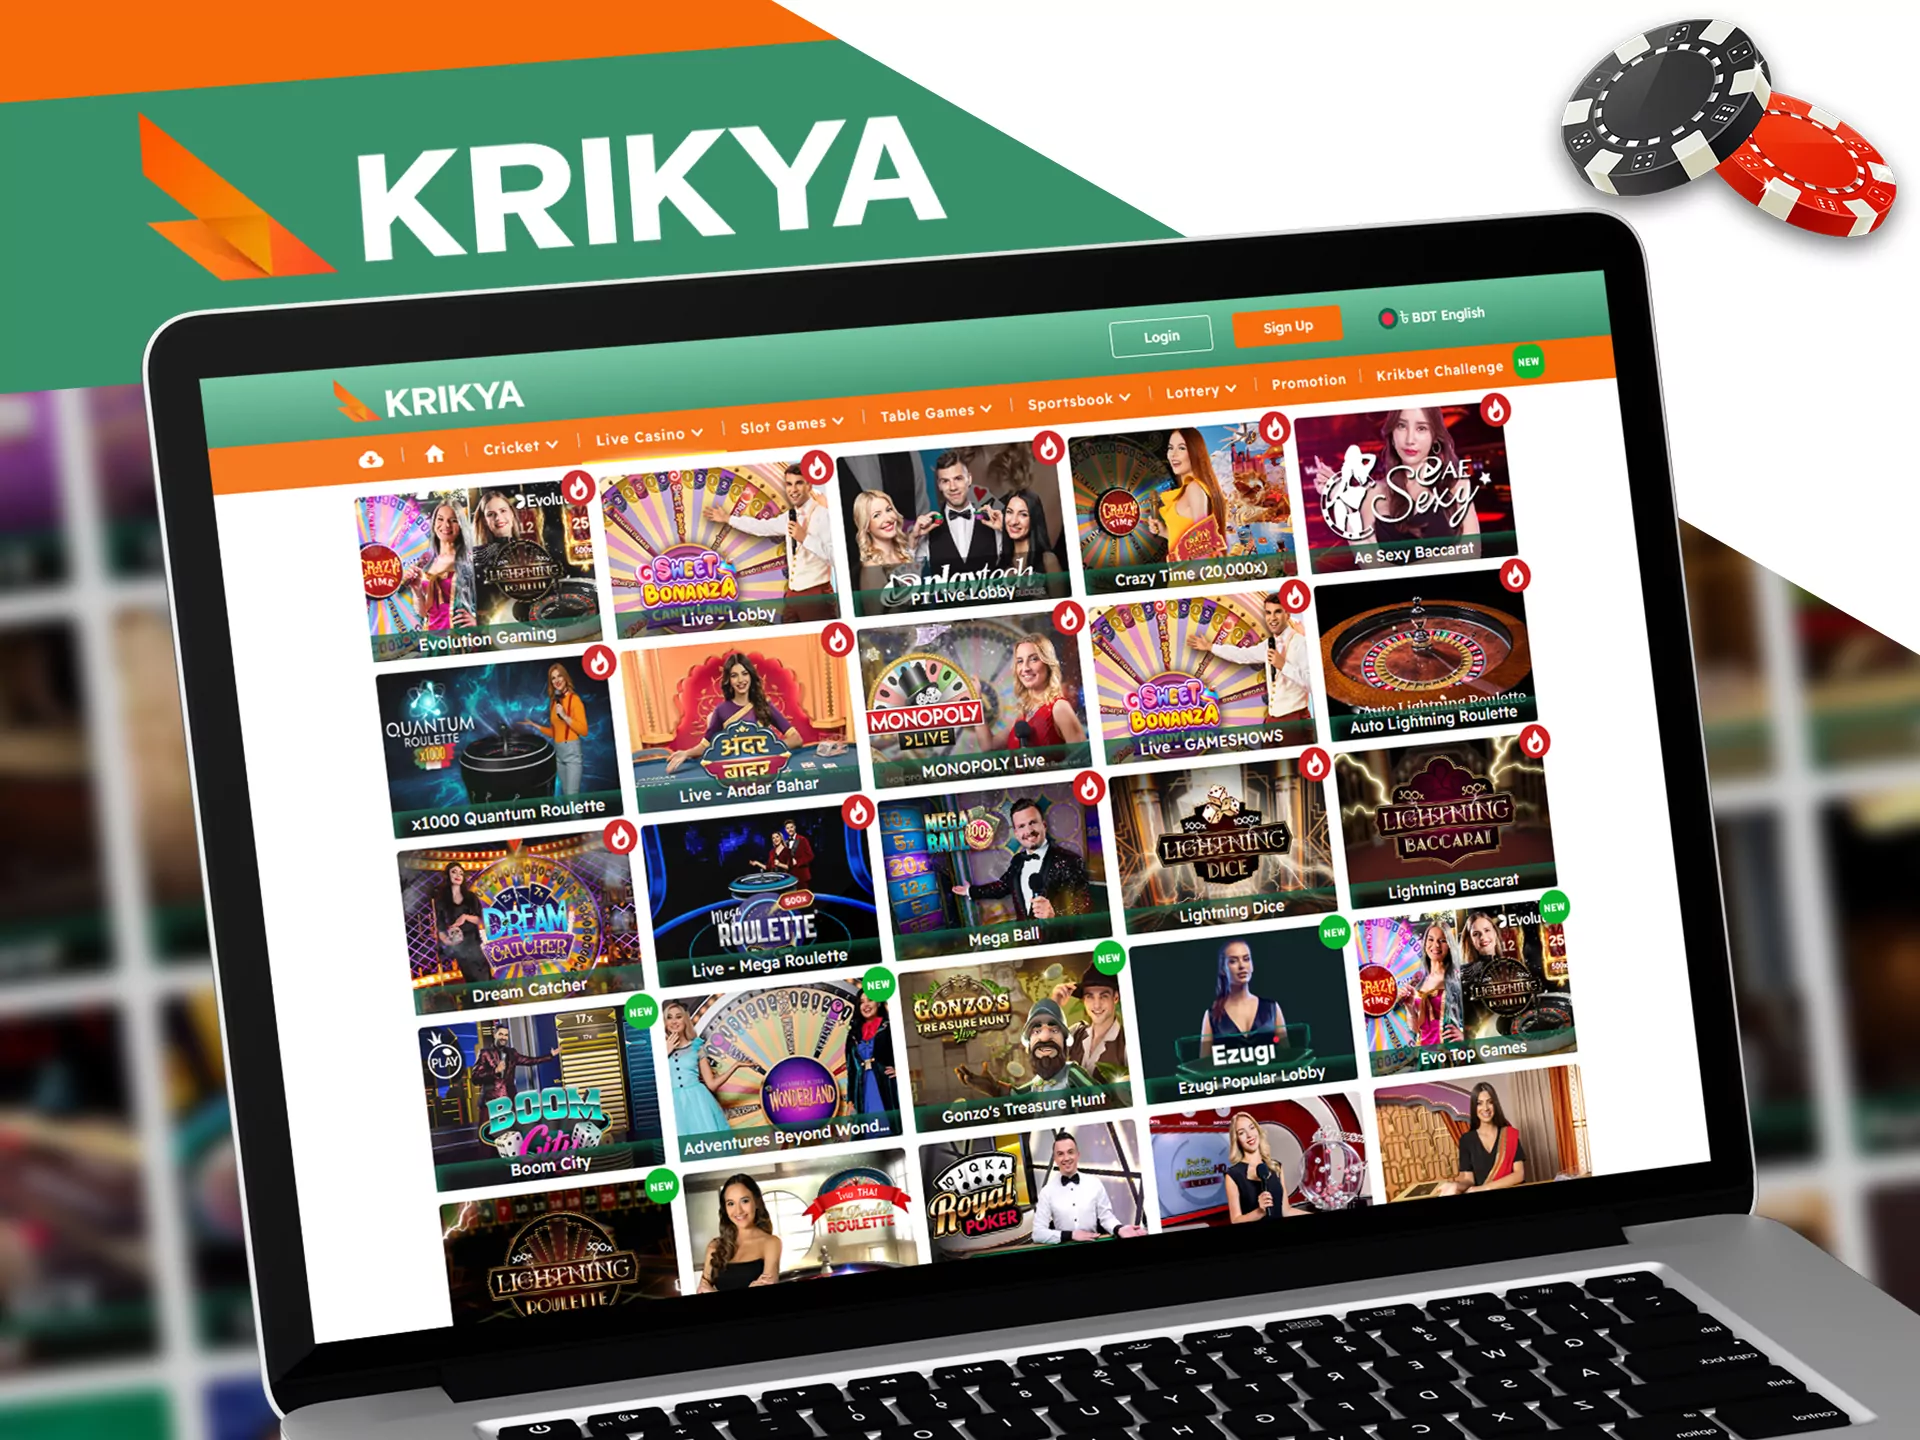 Krikya live casino provides huge variety of live format tables.